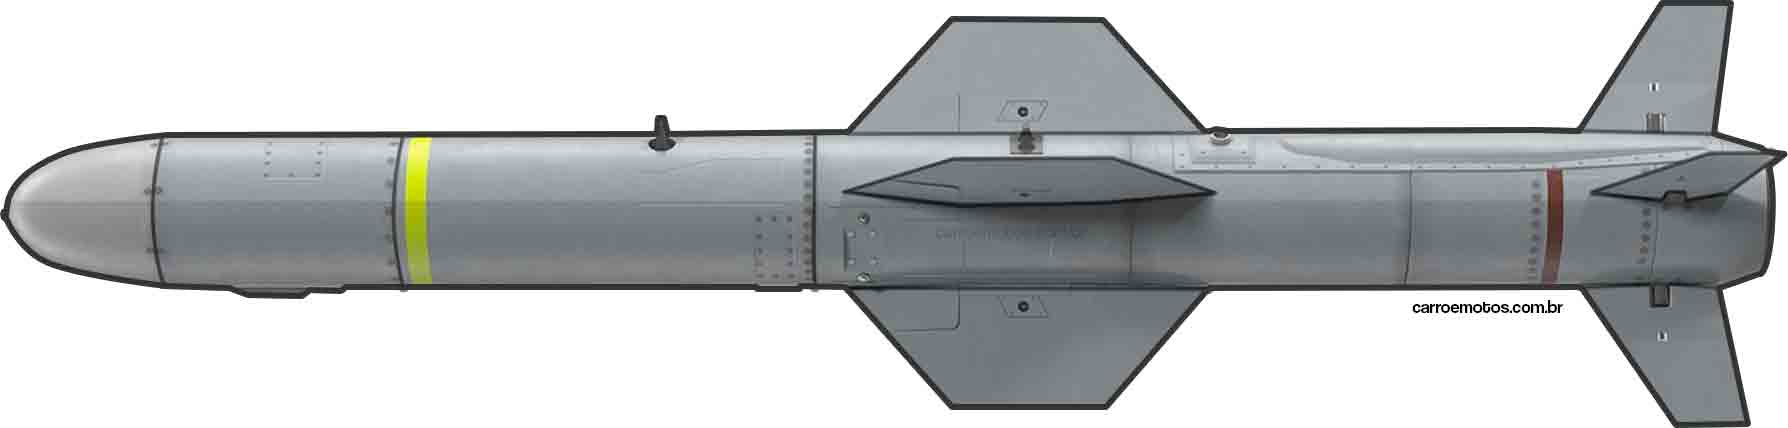 Protiponorkový raketový systém UGM-84L Harpoon Block II. Foto: Carro e motos